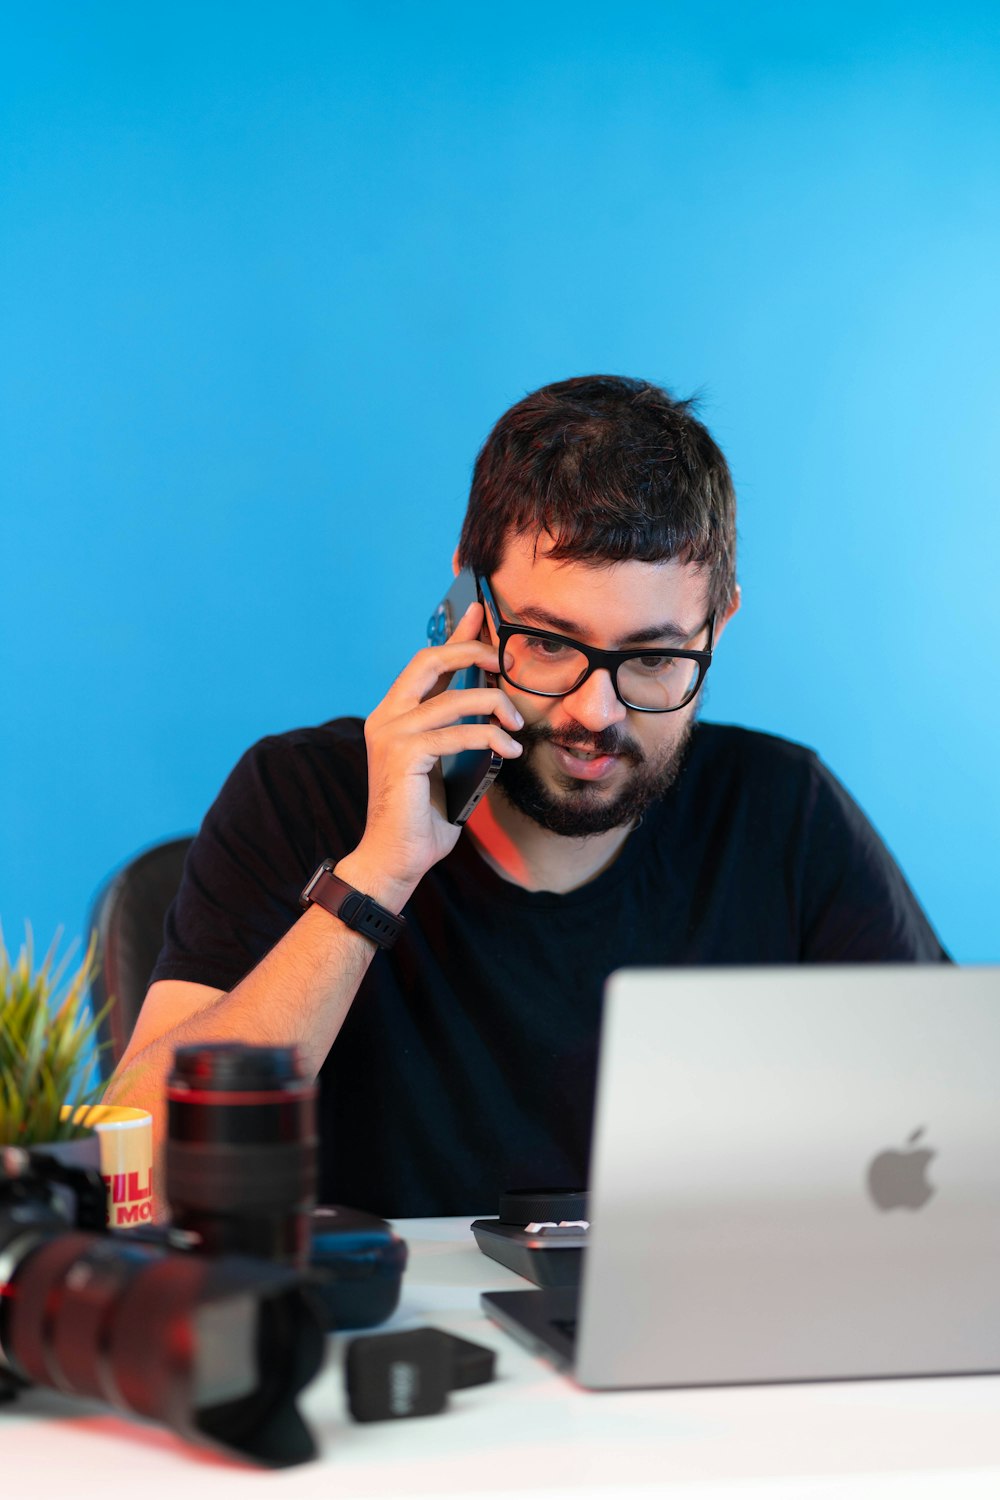 Un hombre sentado frente a una computadora portátil hablando por teléfono celular